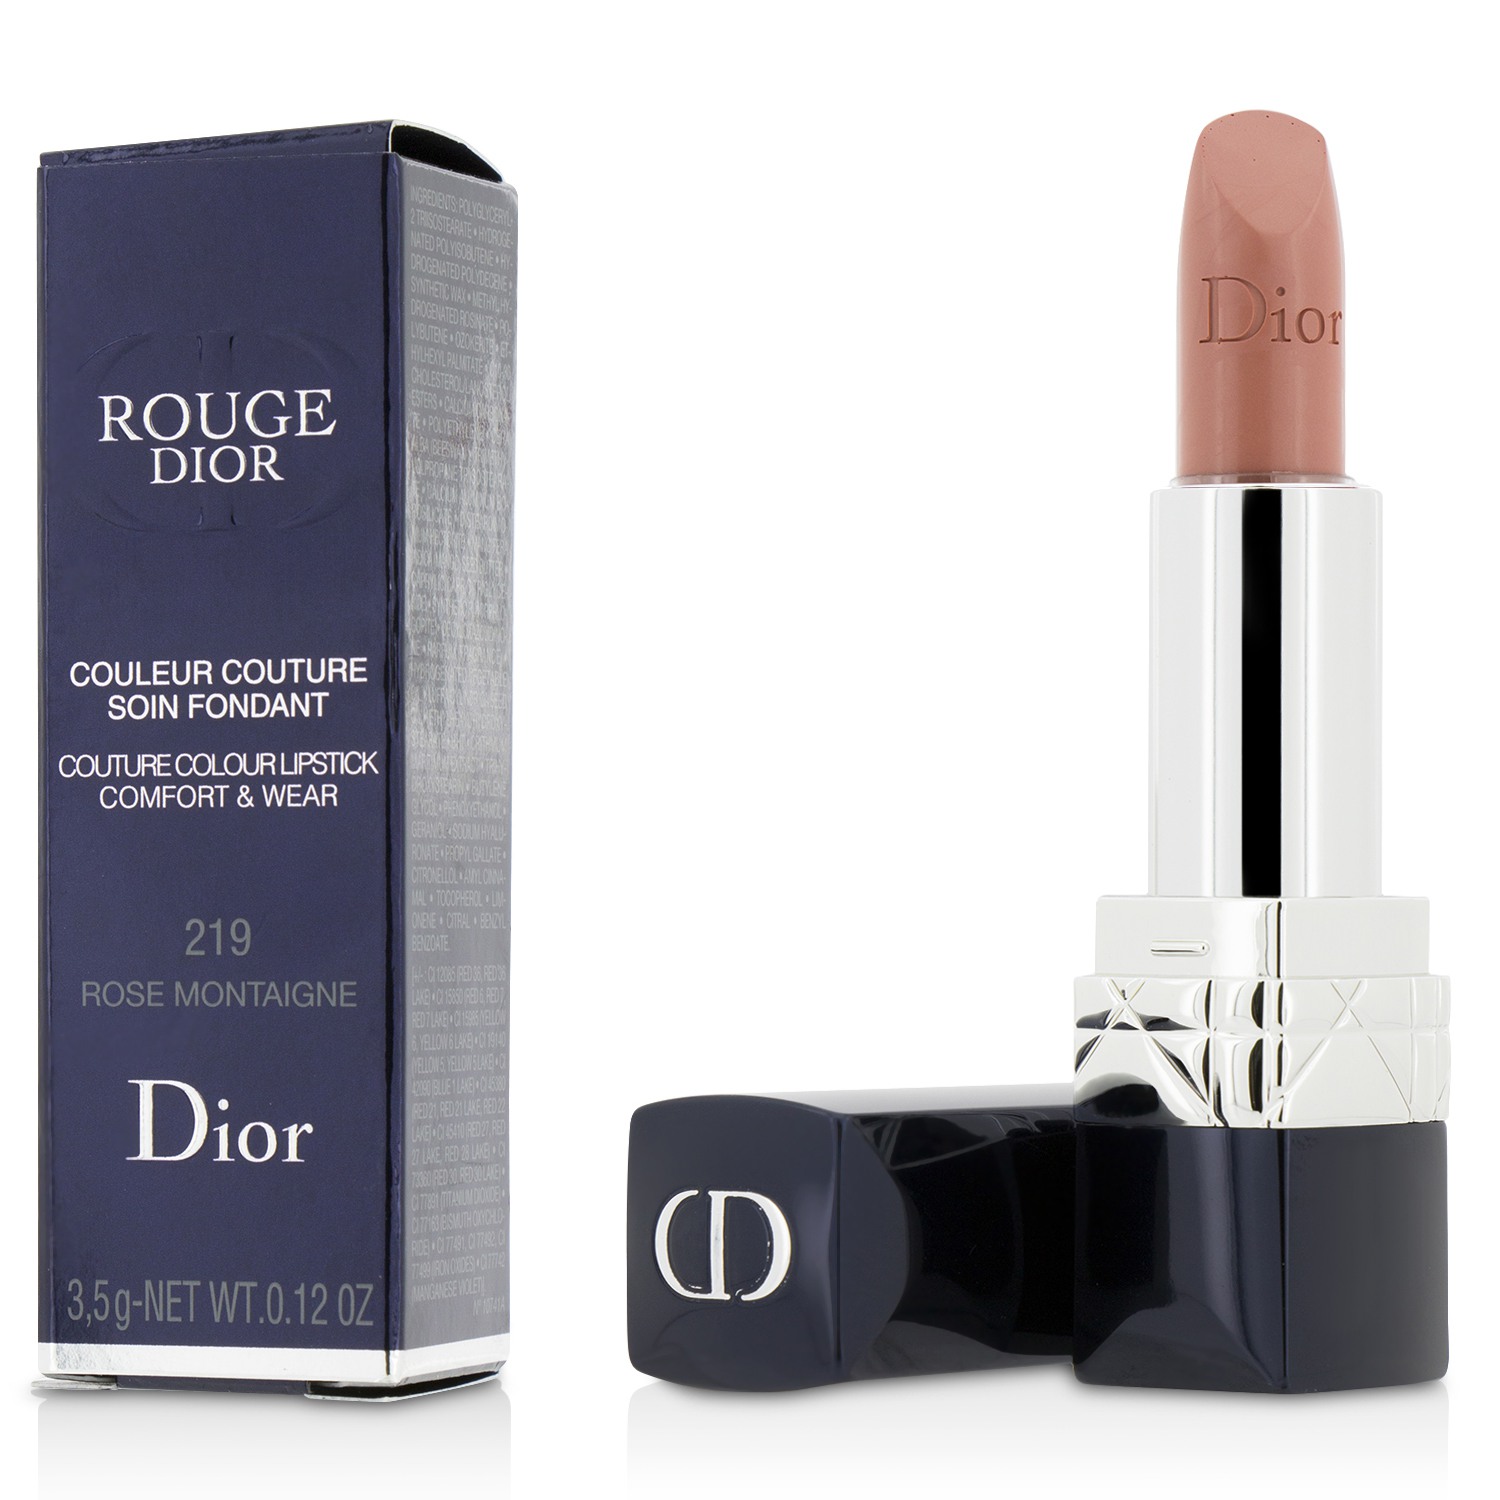 Rouge Dior Couture Colour Comfort & Wear Lipstick - # 219 Rose Montaigne Christian Dior Image